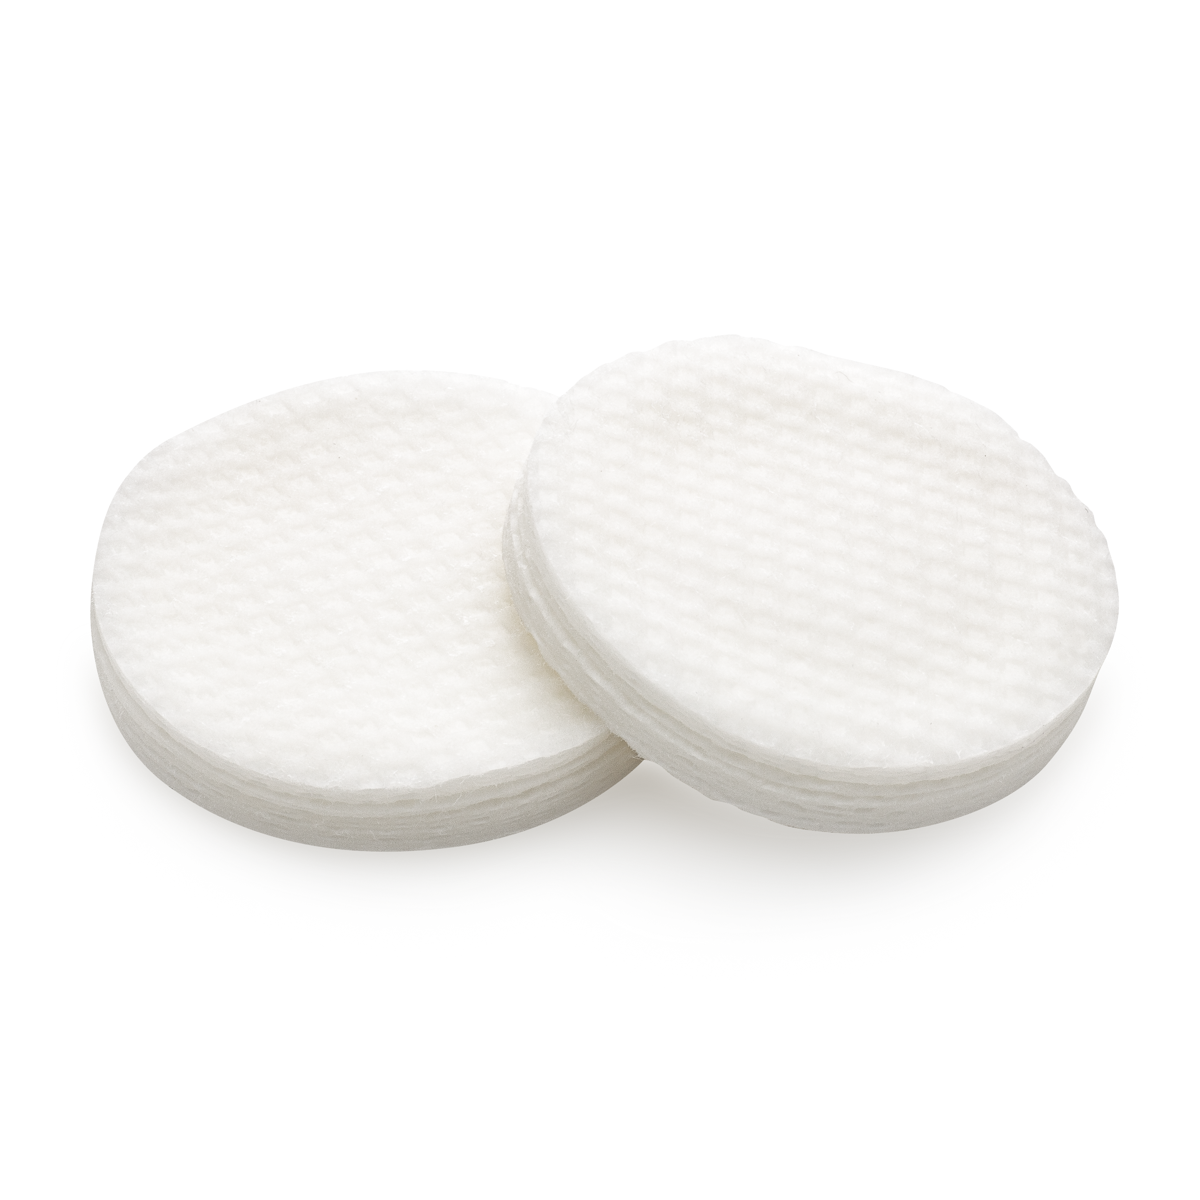 White round circle gauze pads Resurface retinol anti-aging facial pads 60 count  Dermal Essentials Medical Grade Skincare